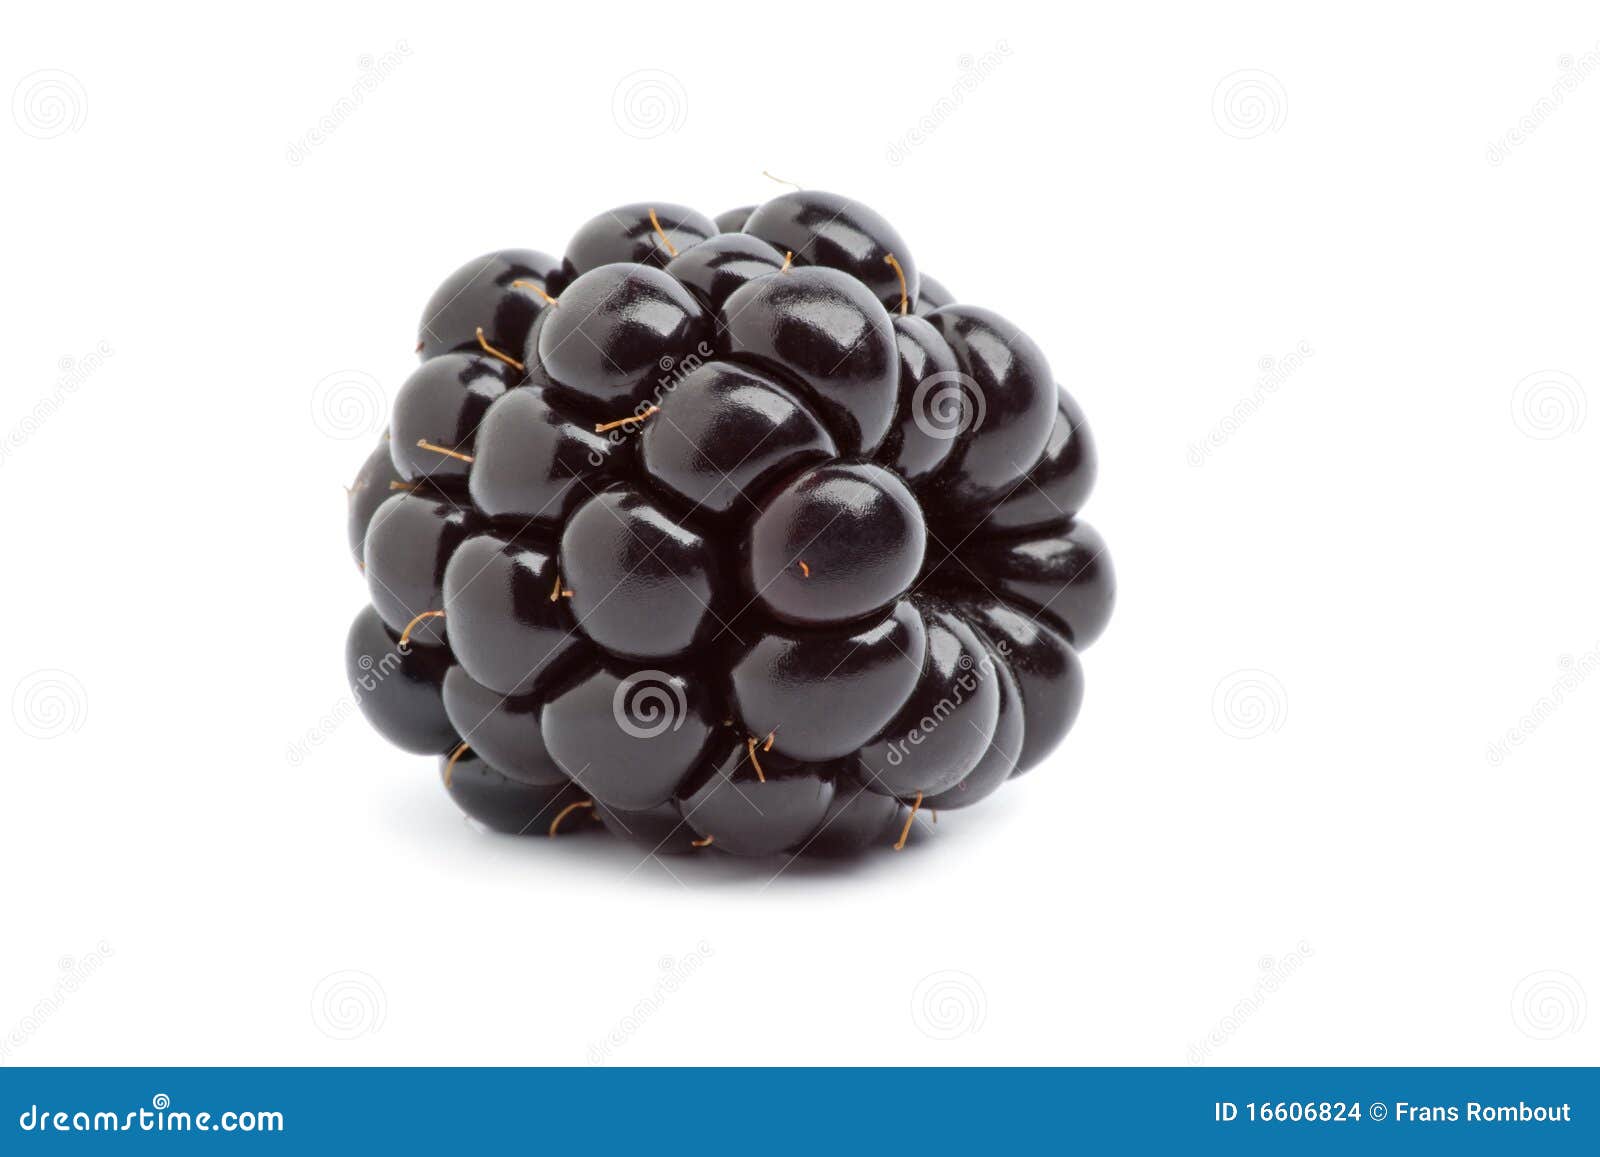 Whole single blackberry stock photo. Image of studio - 16606824